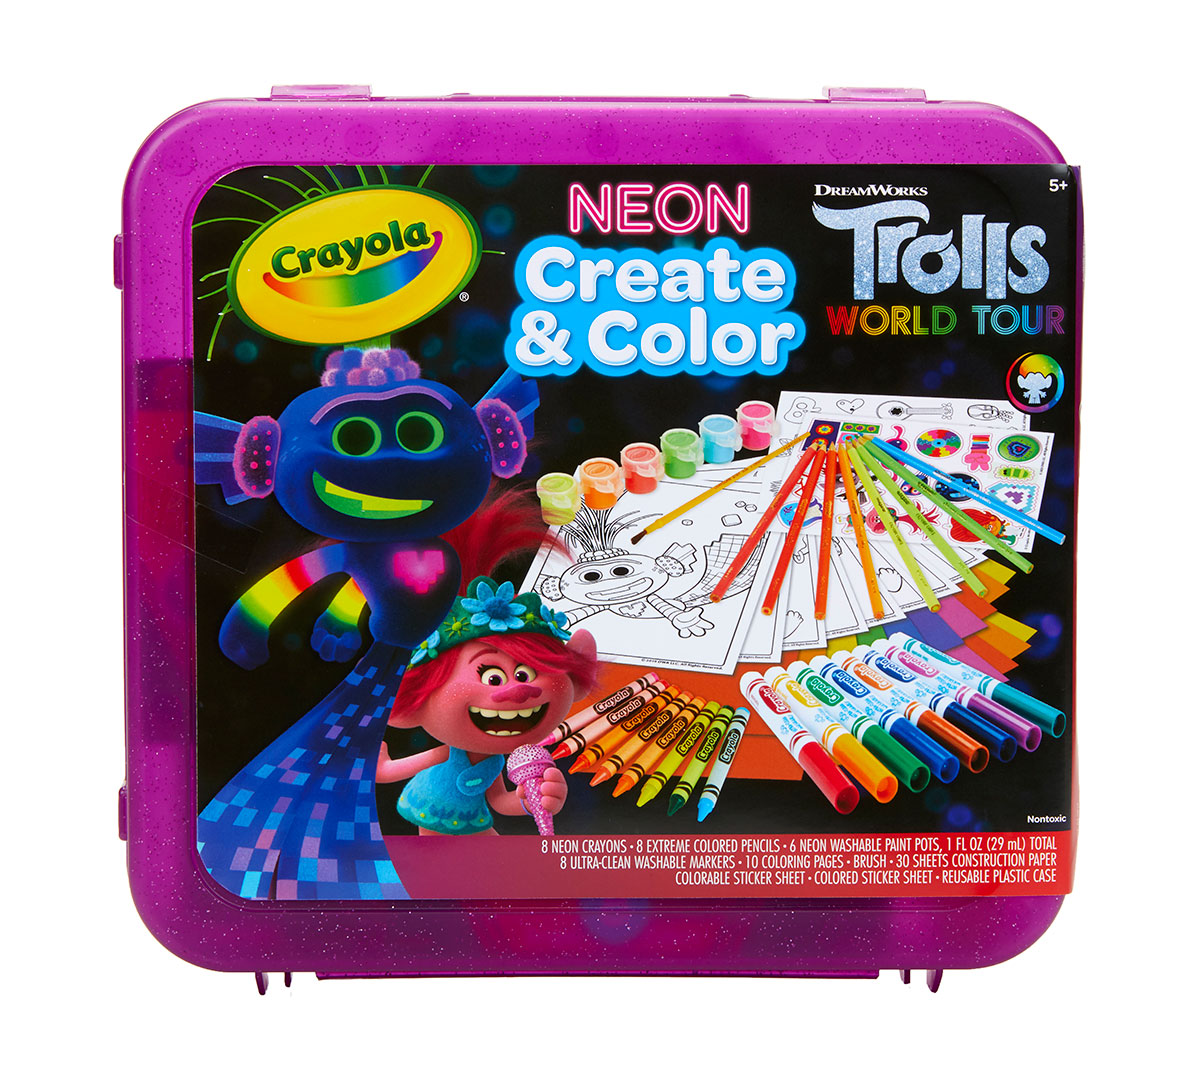 Trolls Movie Coloring Set Includes 8 Coloring Sheets 6 Color Pencils & Sticker S 